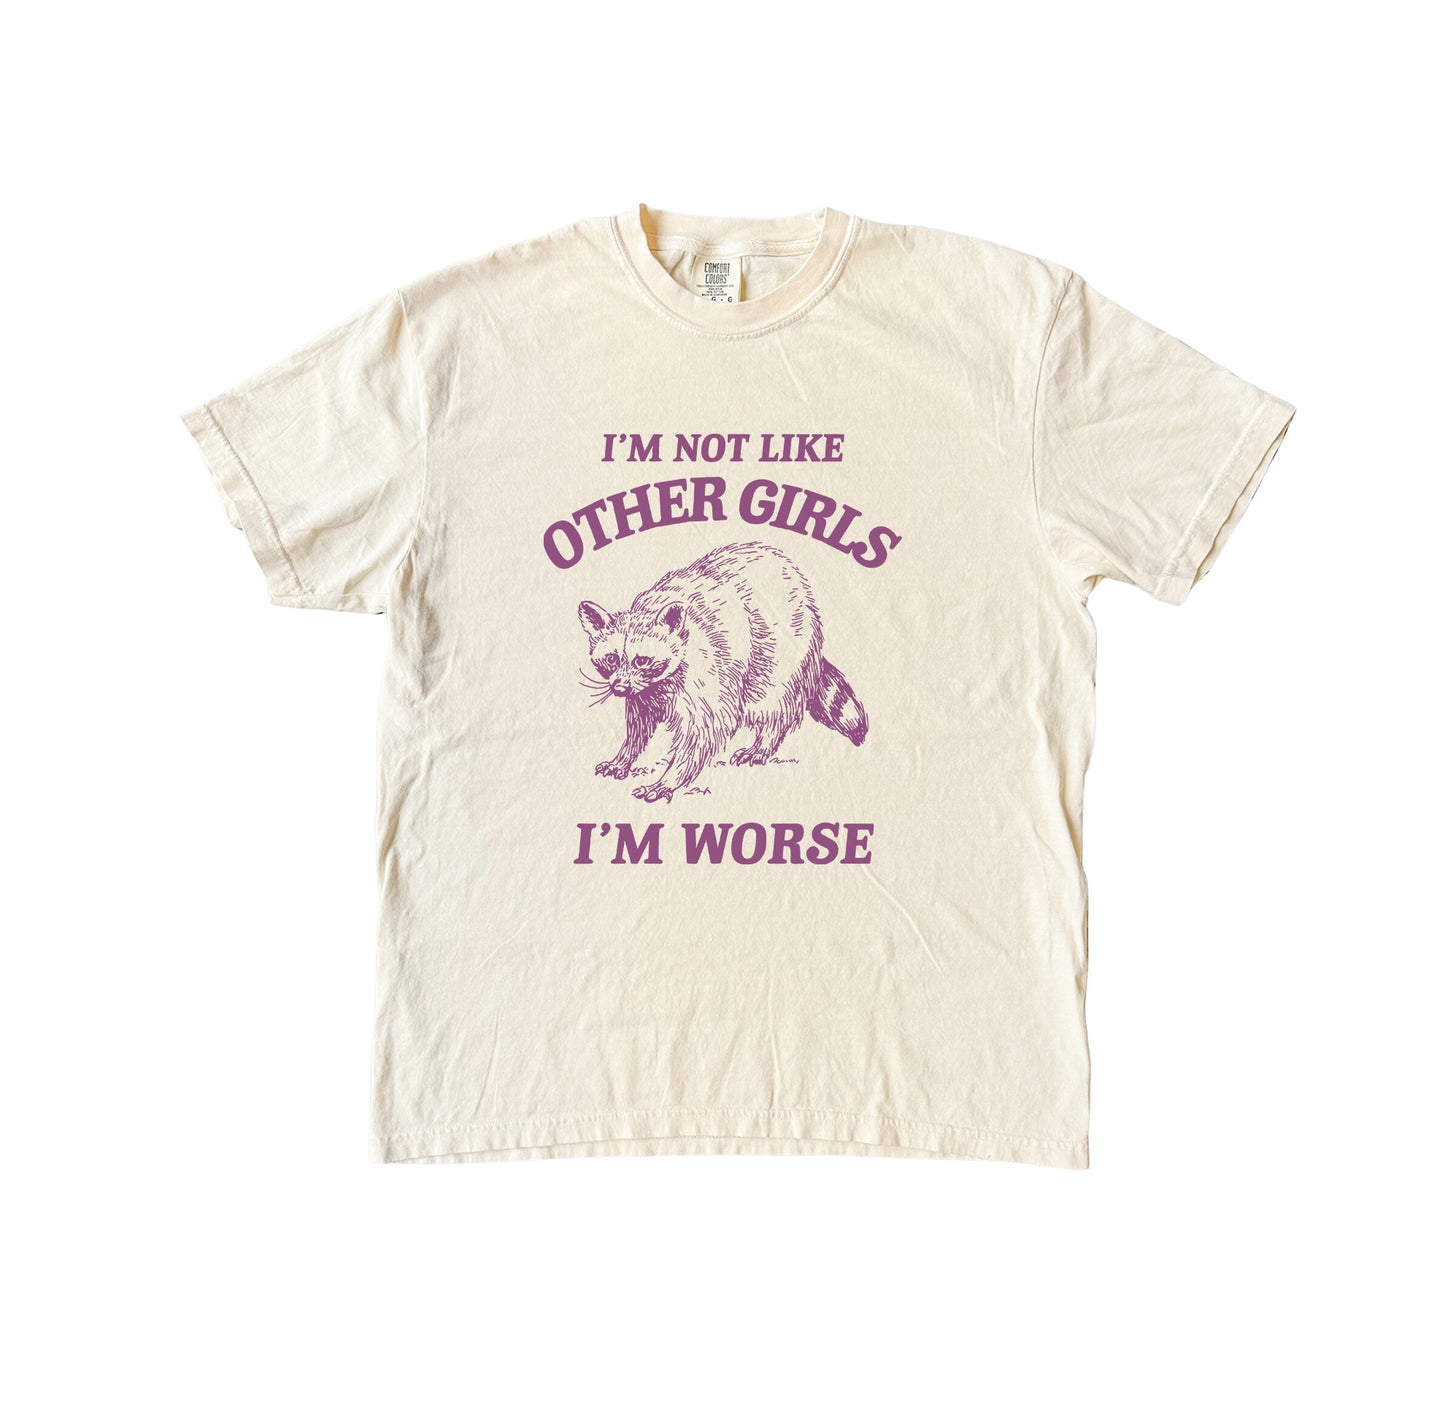 I'm Not Like Other Girls, I'm Worse T-Shirt